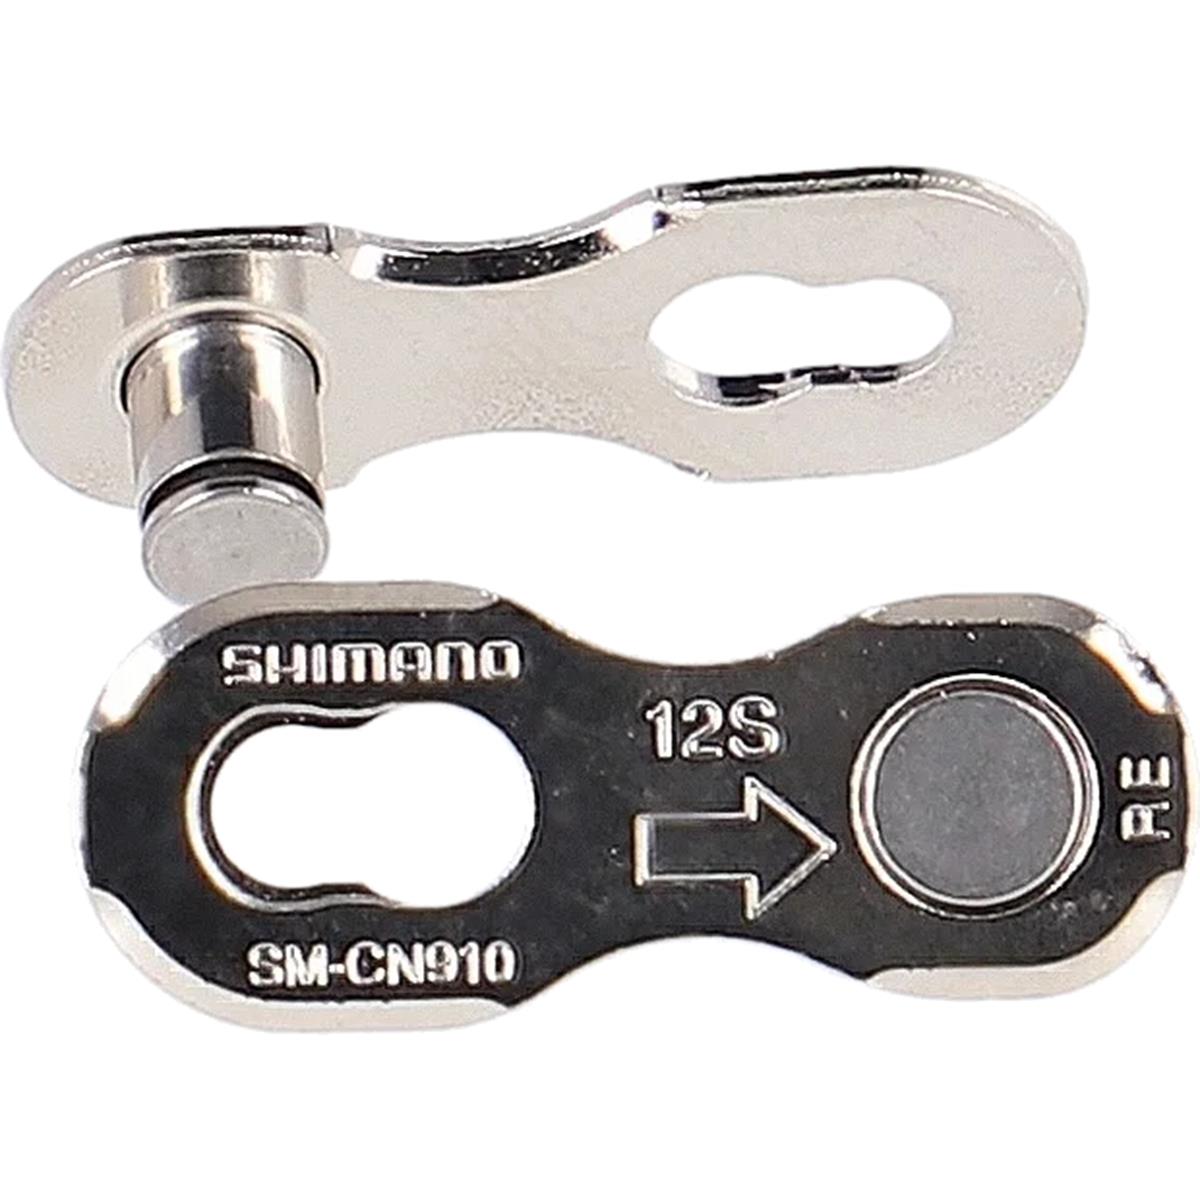 Shimano MTB Chain lock SM-CN910 12-Speed, Silver, 2 Pair